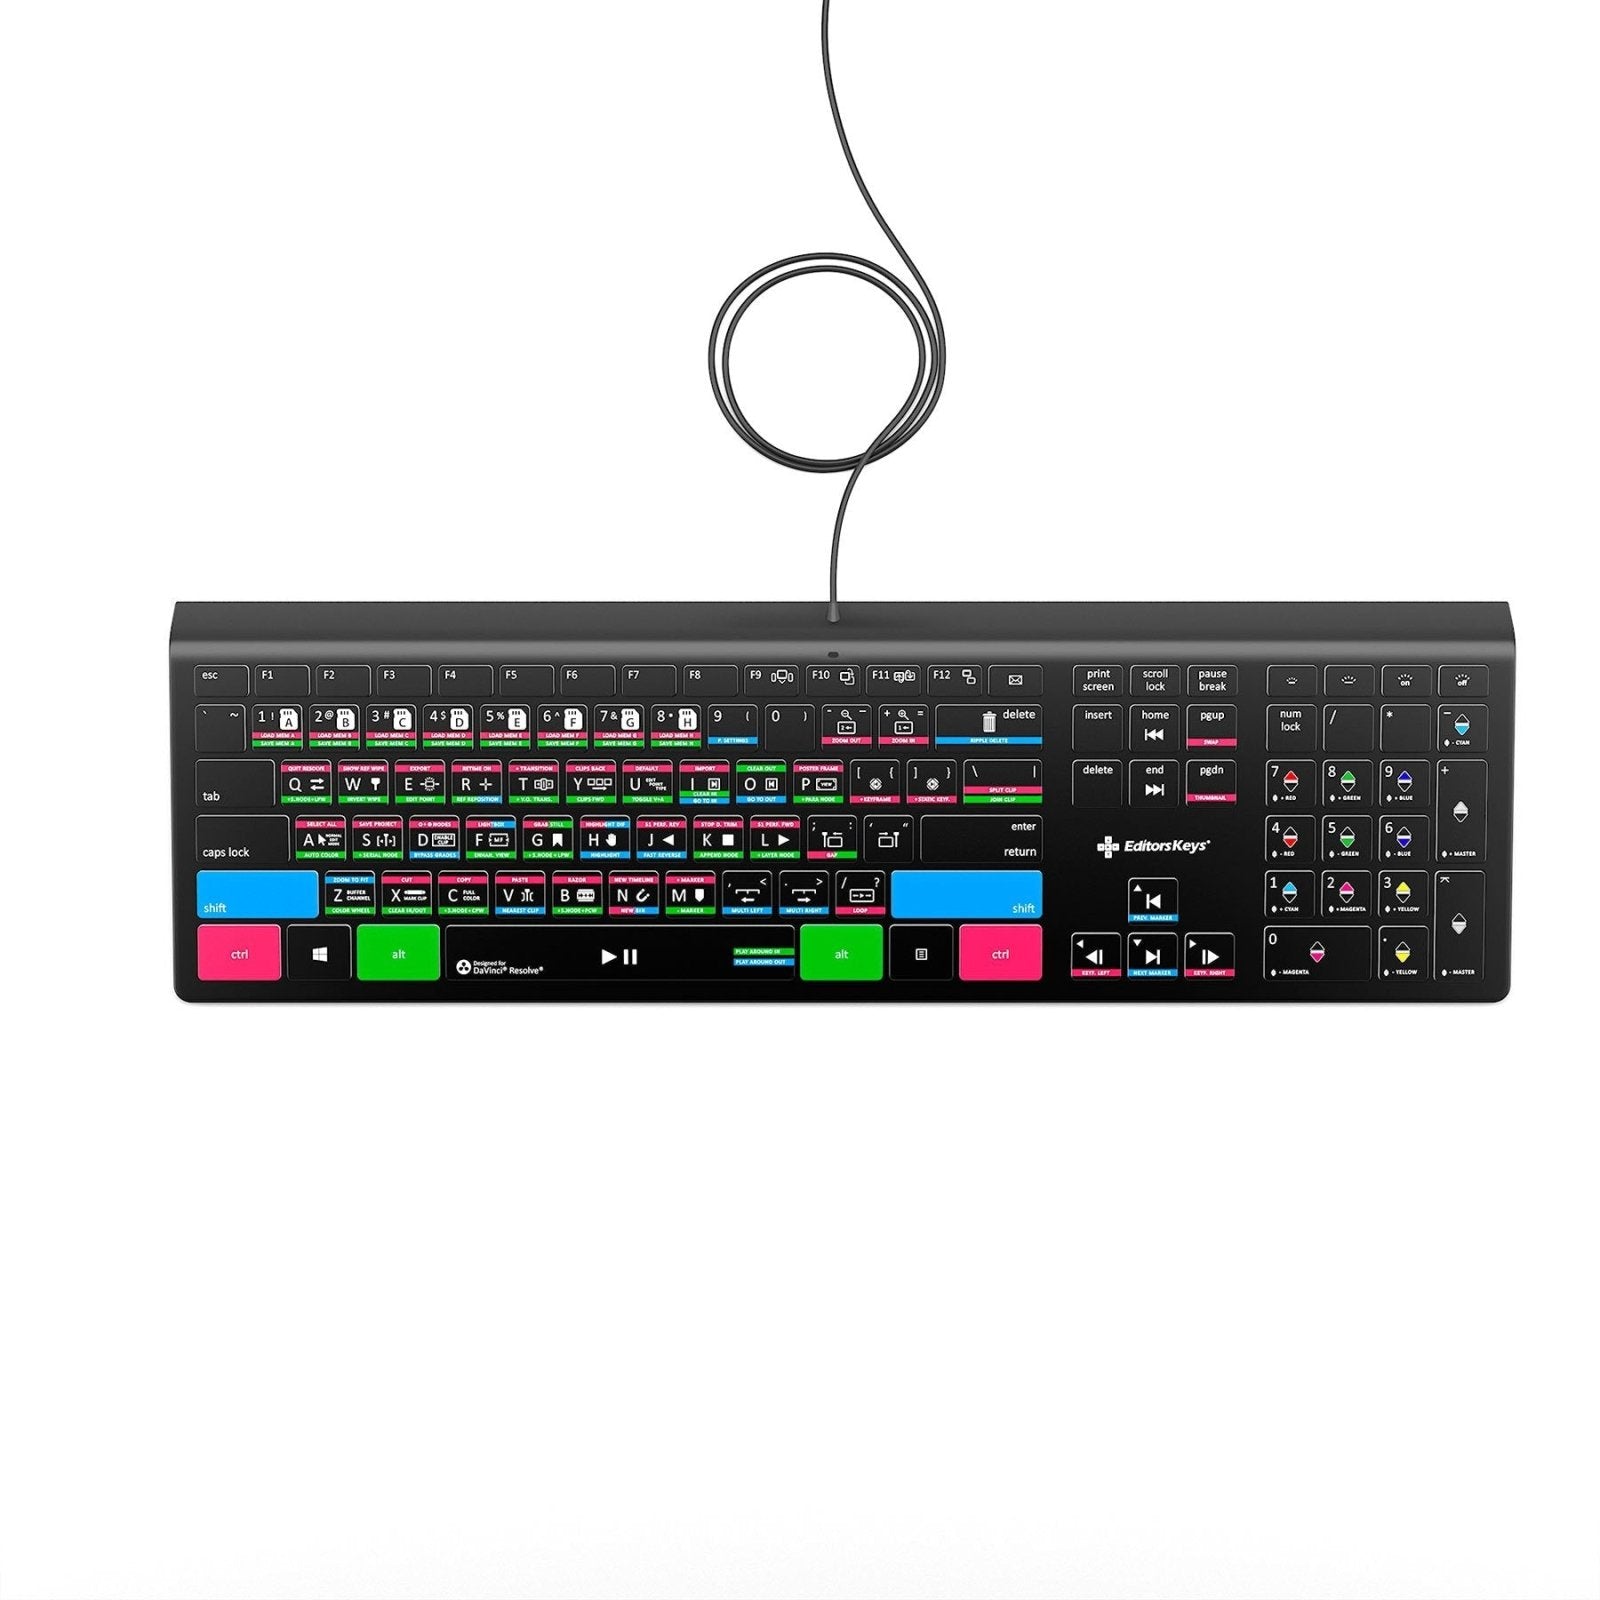 DaVinci Resolve 18 Keyboard - Backlit Mac or PC - Editors Keys